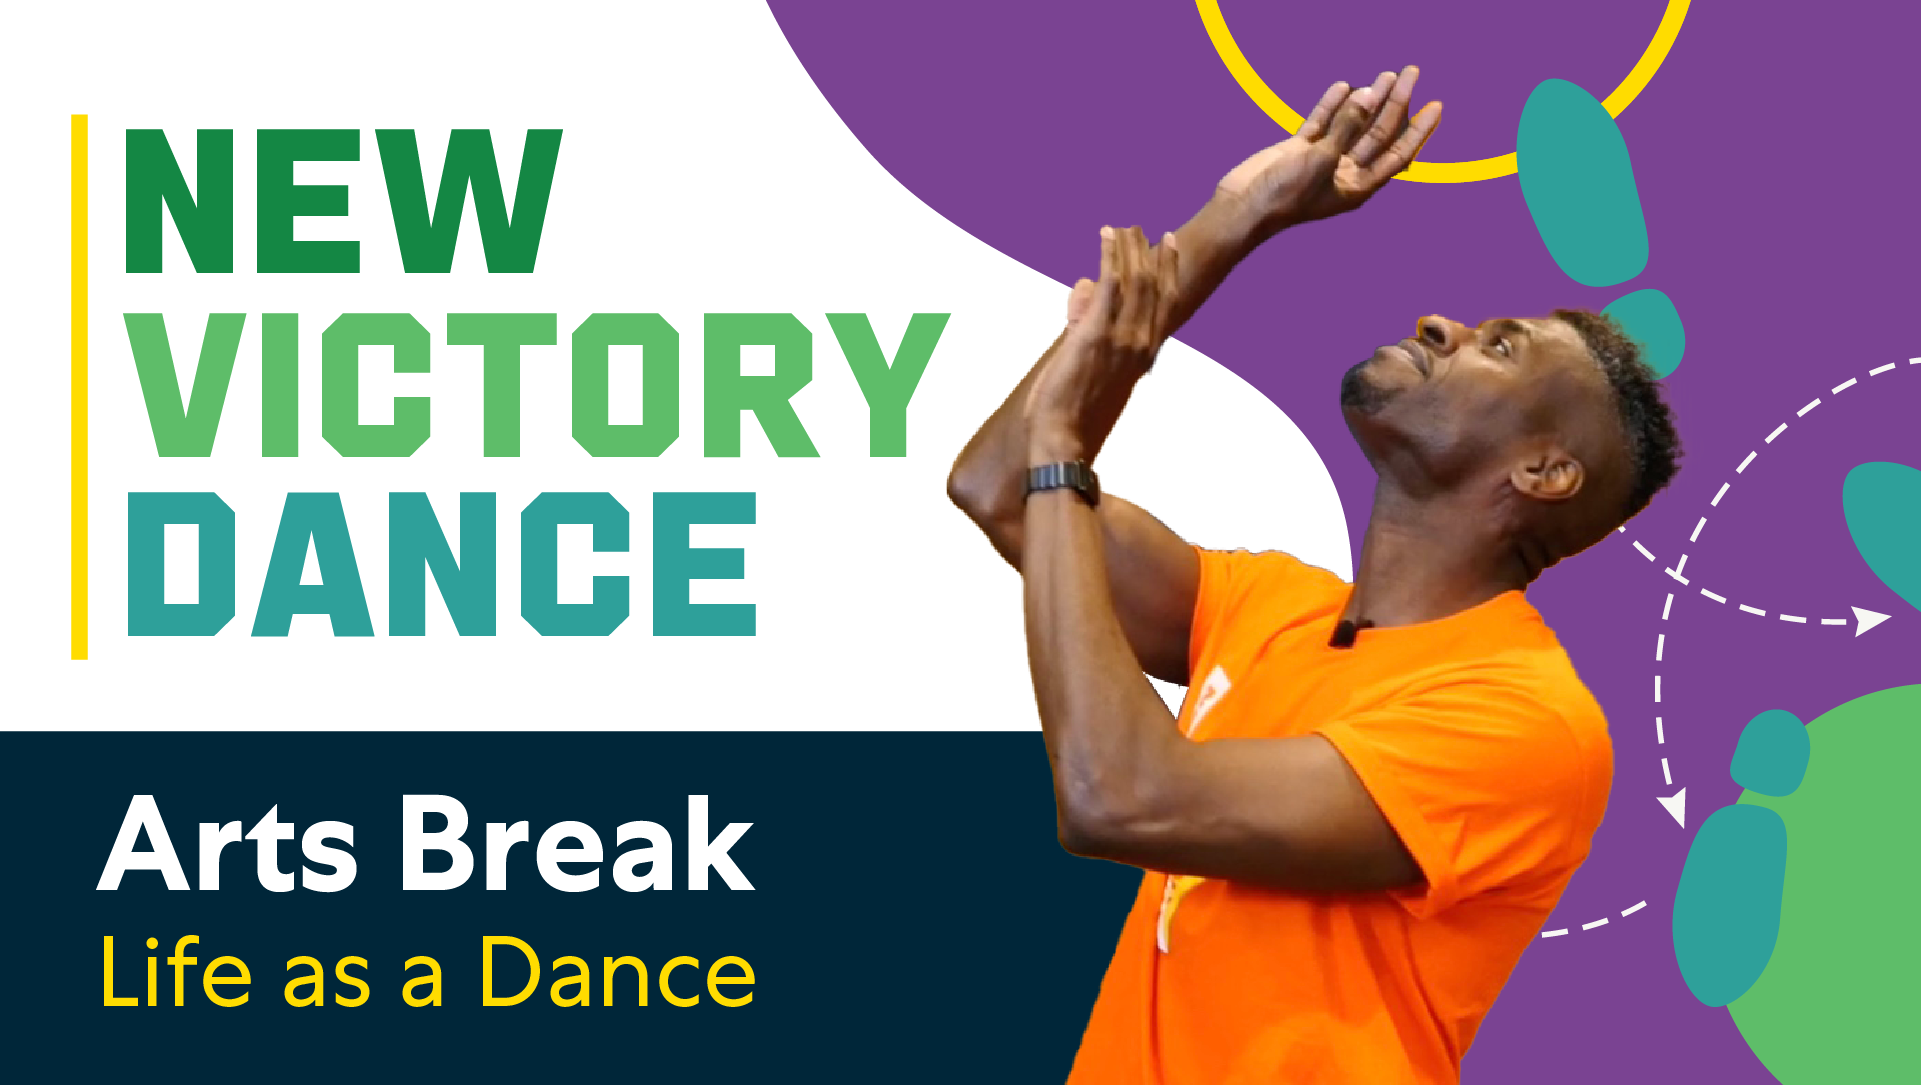 New Victory Dance Arts Break: Life as a Dance